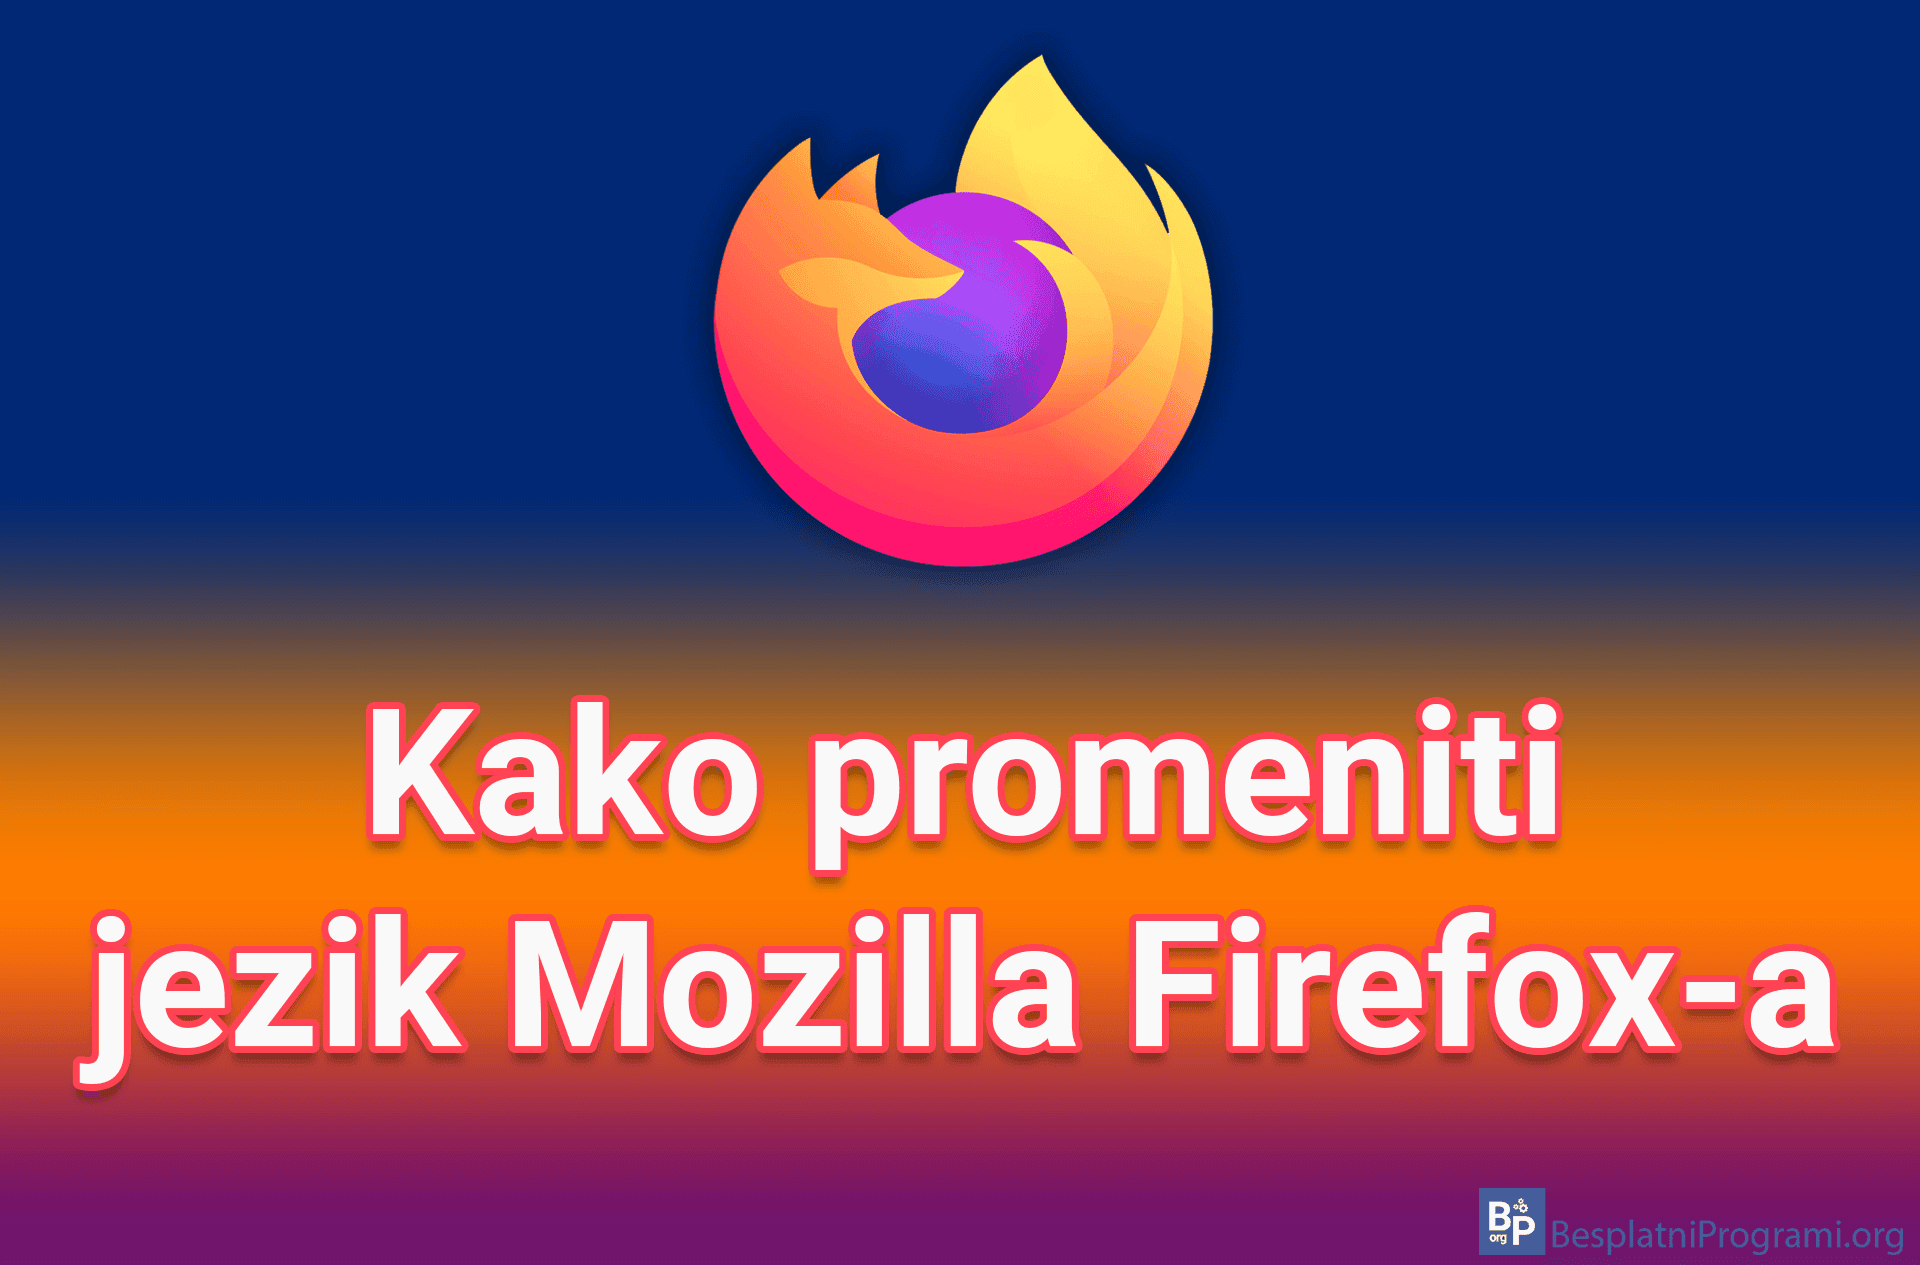 Kako promeniti jezik Mozilla Firefox-a